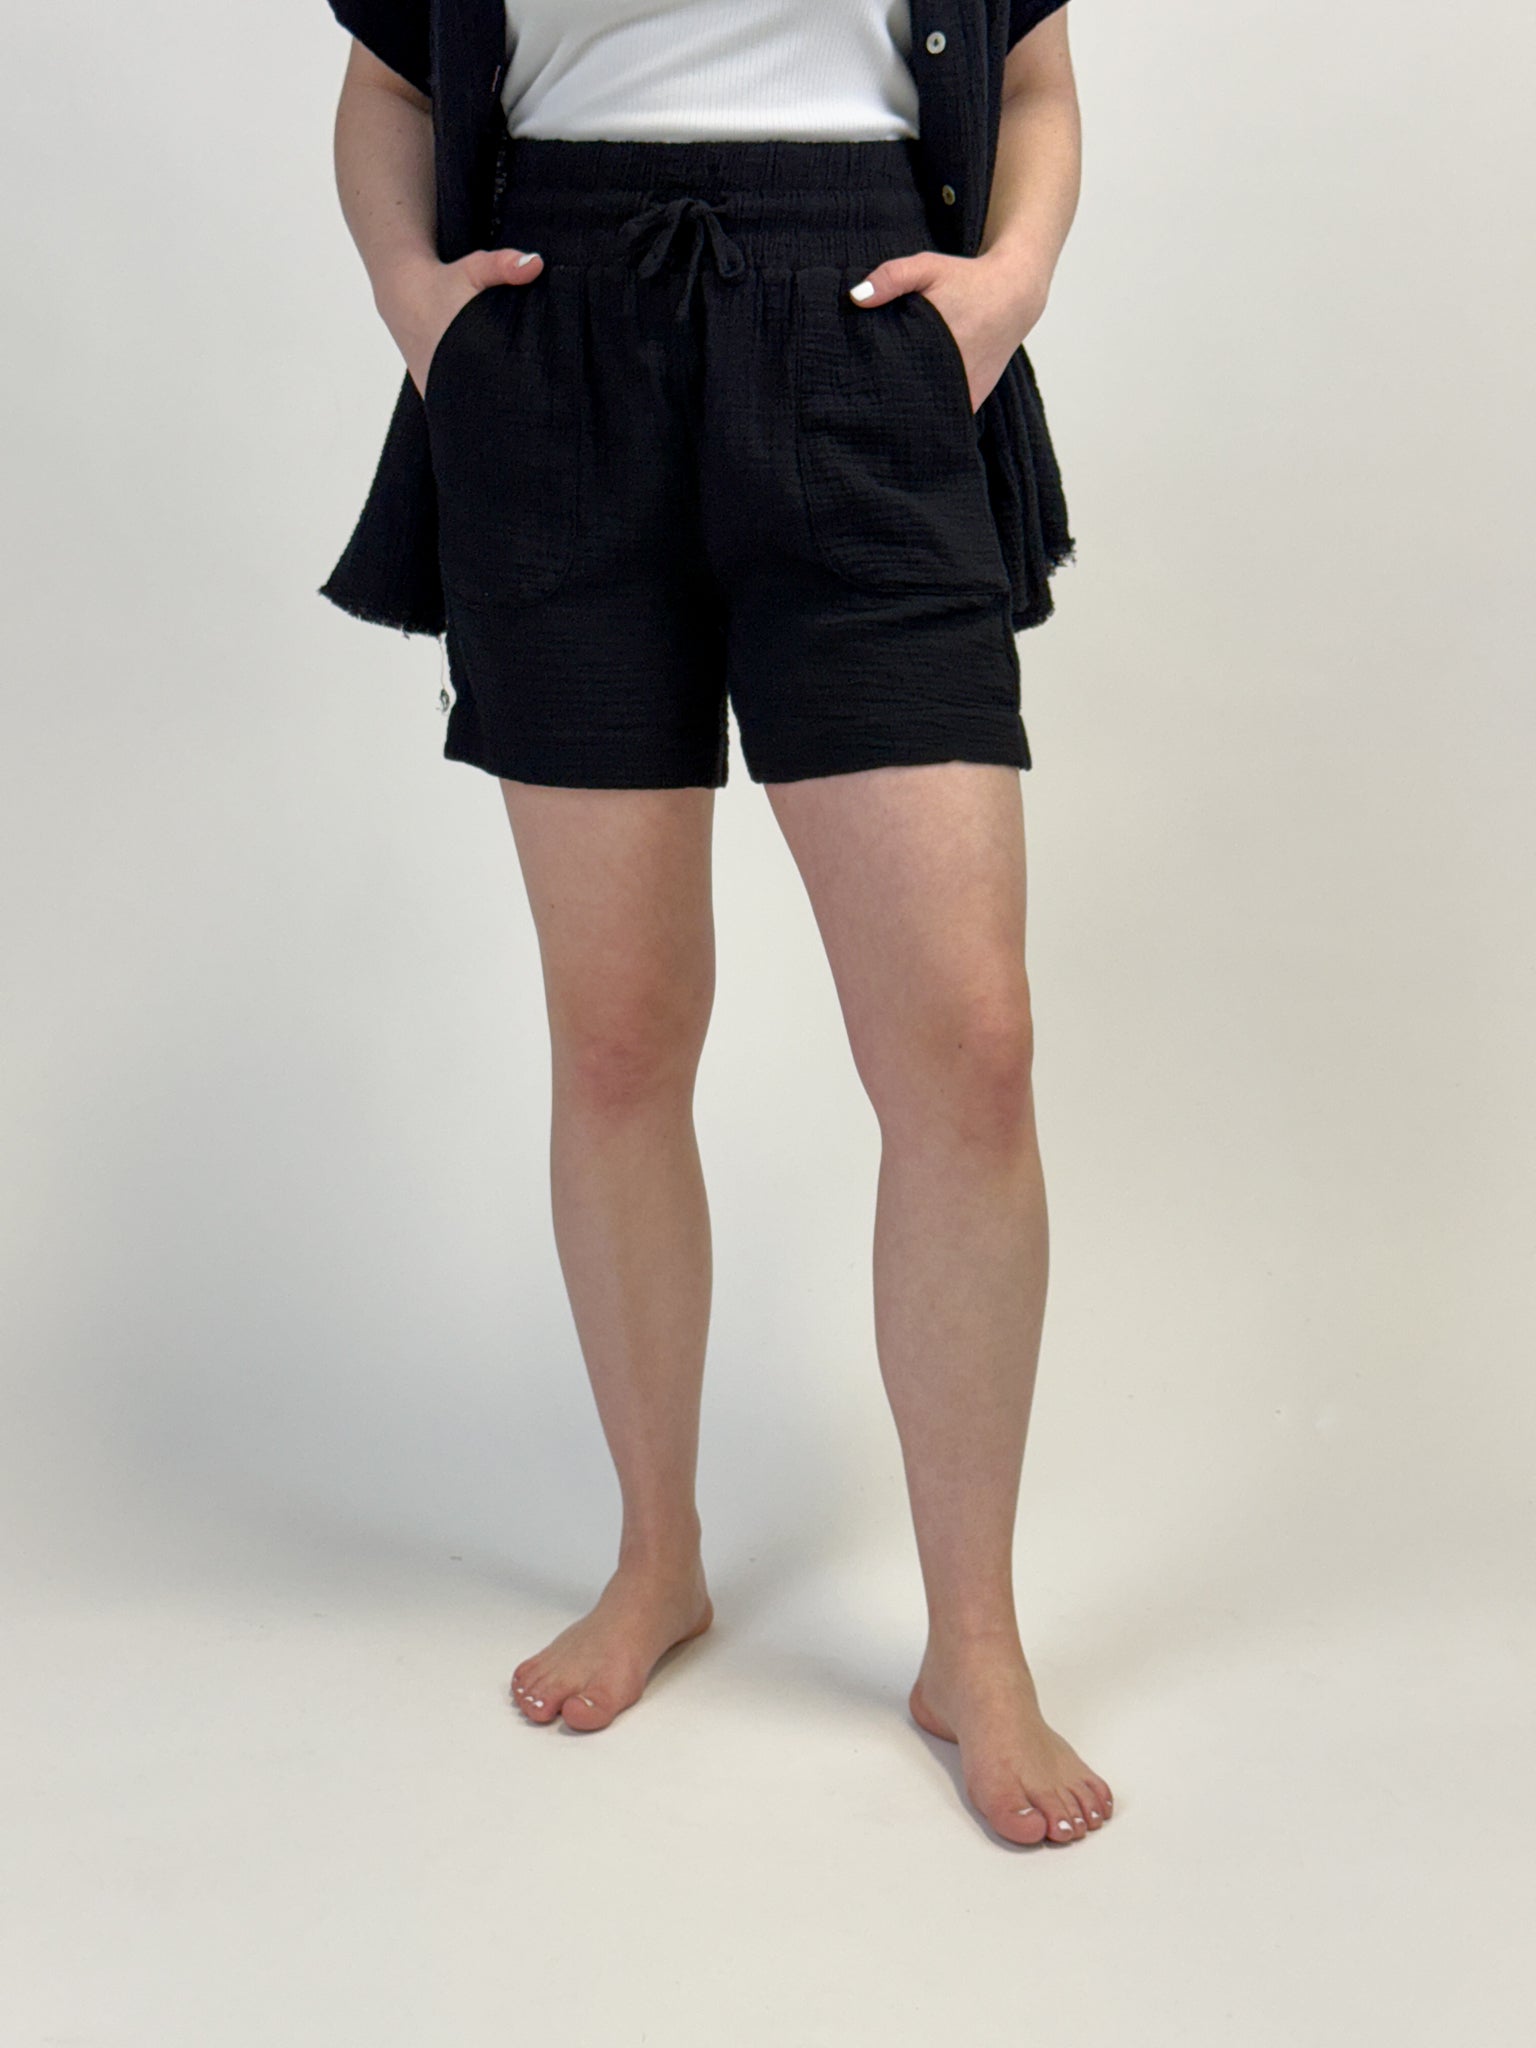 Tribal Shorts w/ Elastic Waistband - Black